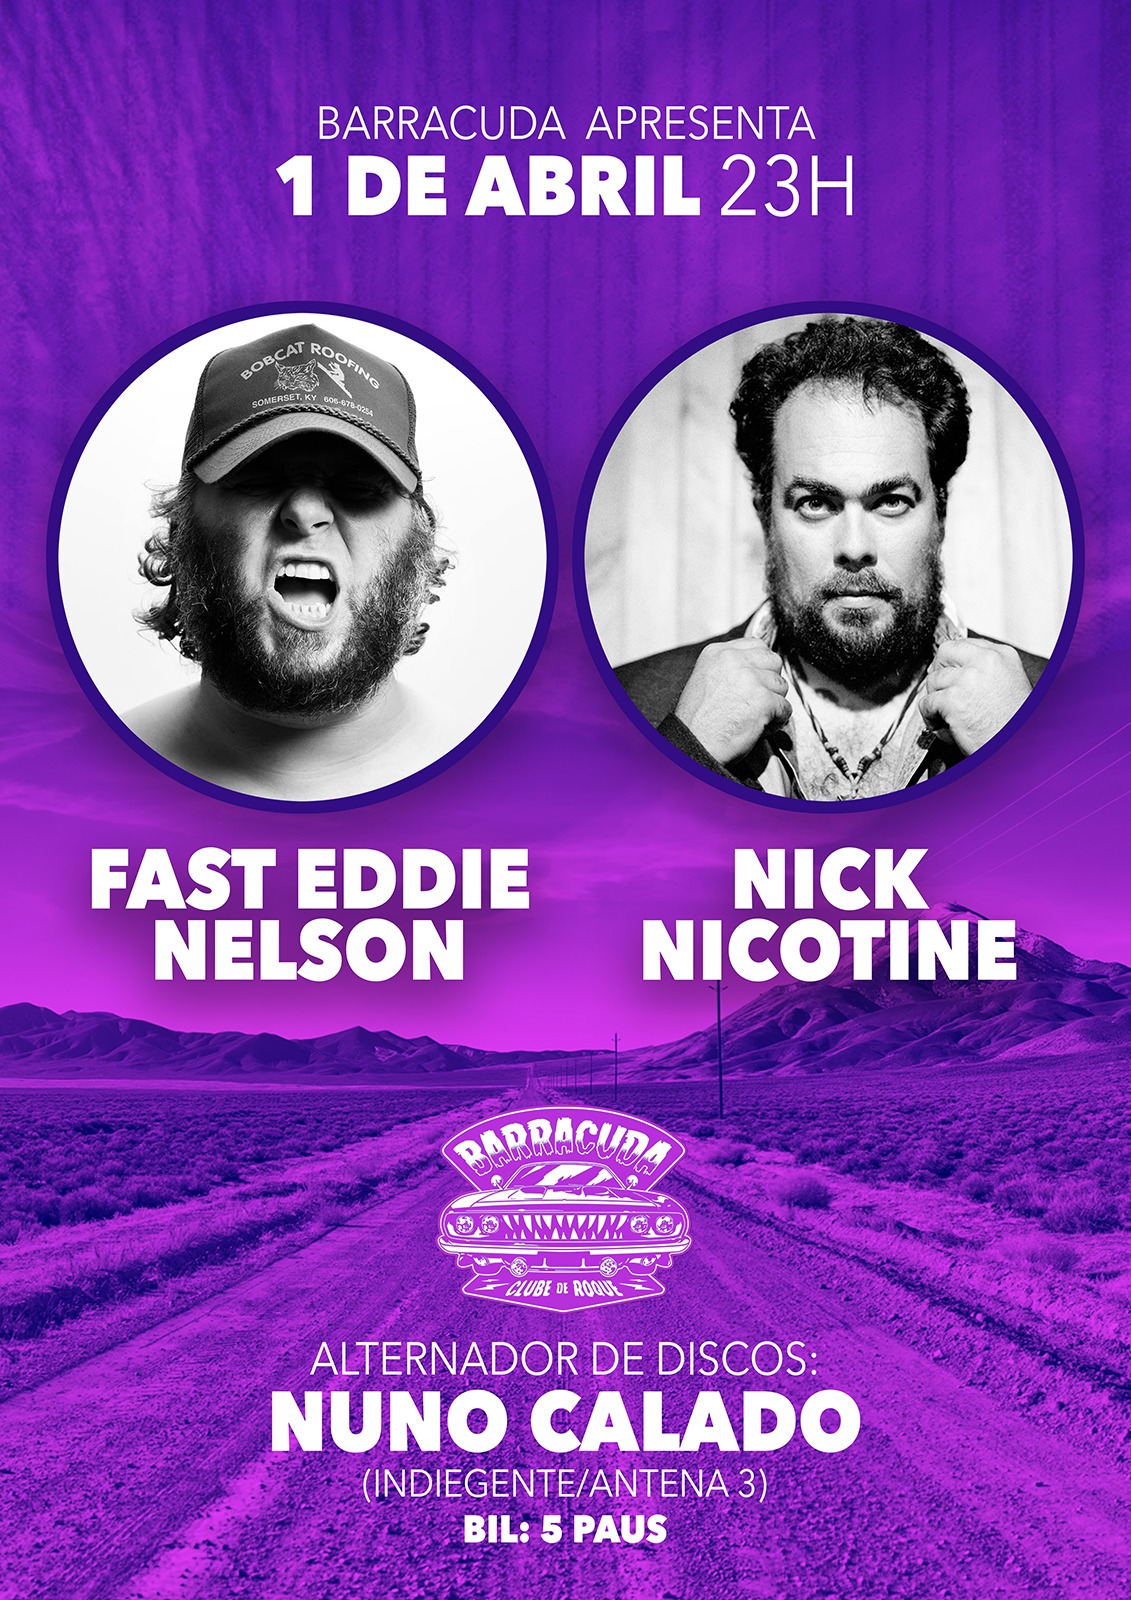 Fast Eddie Nelson & Nick Nicotine - Alternador de discos: Nuno Calado (Indiegente/Antena 3)